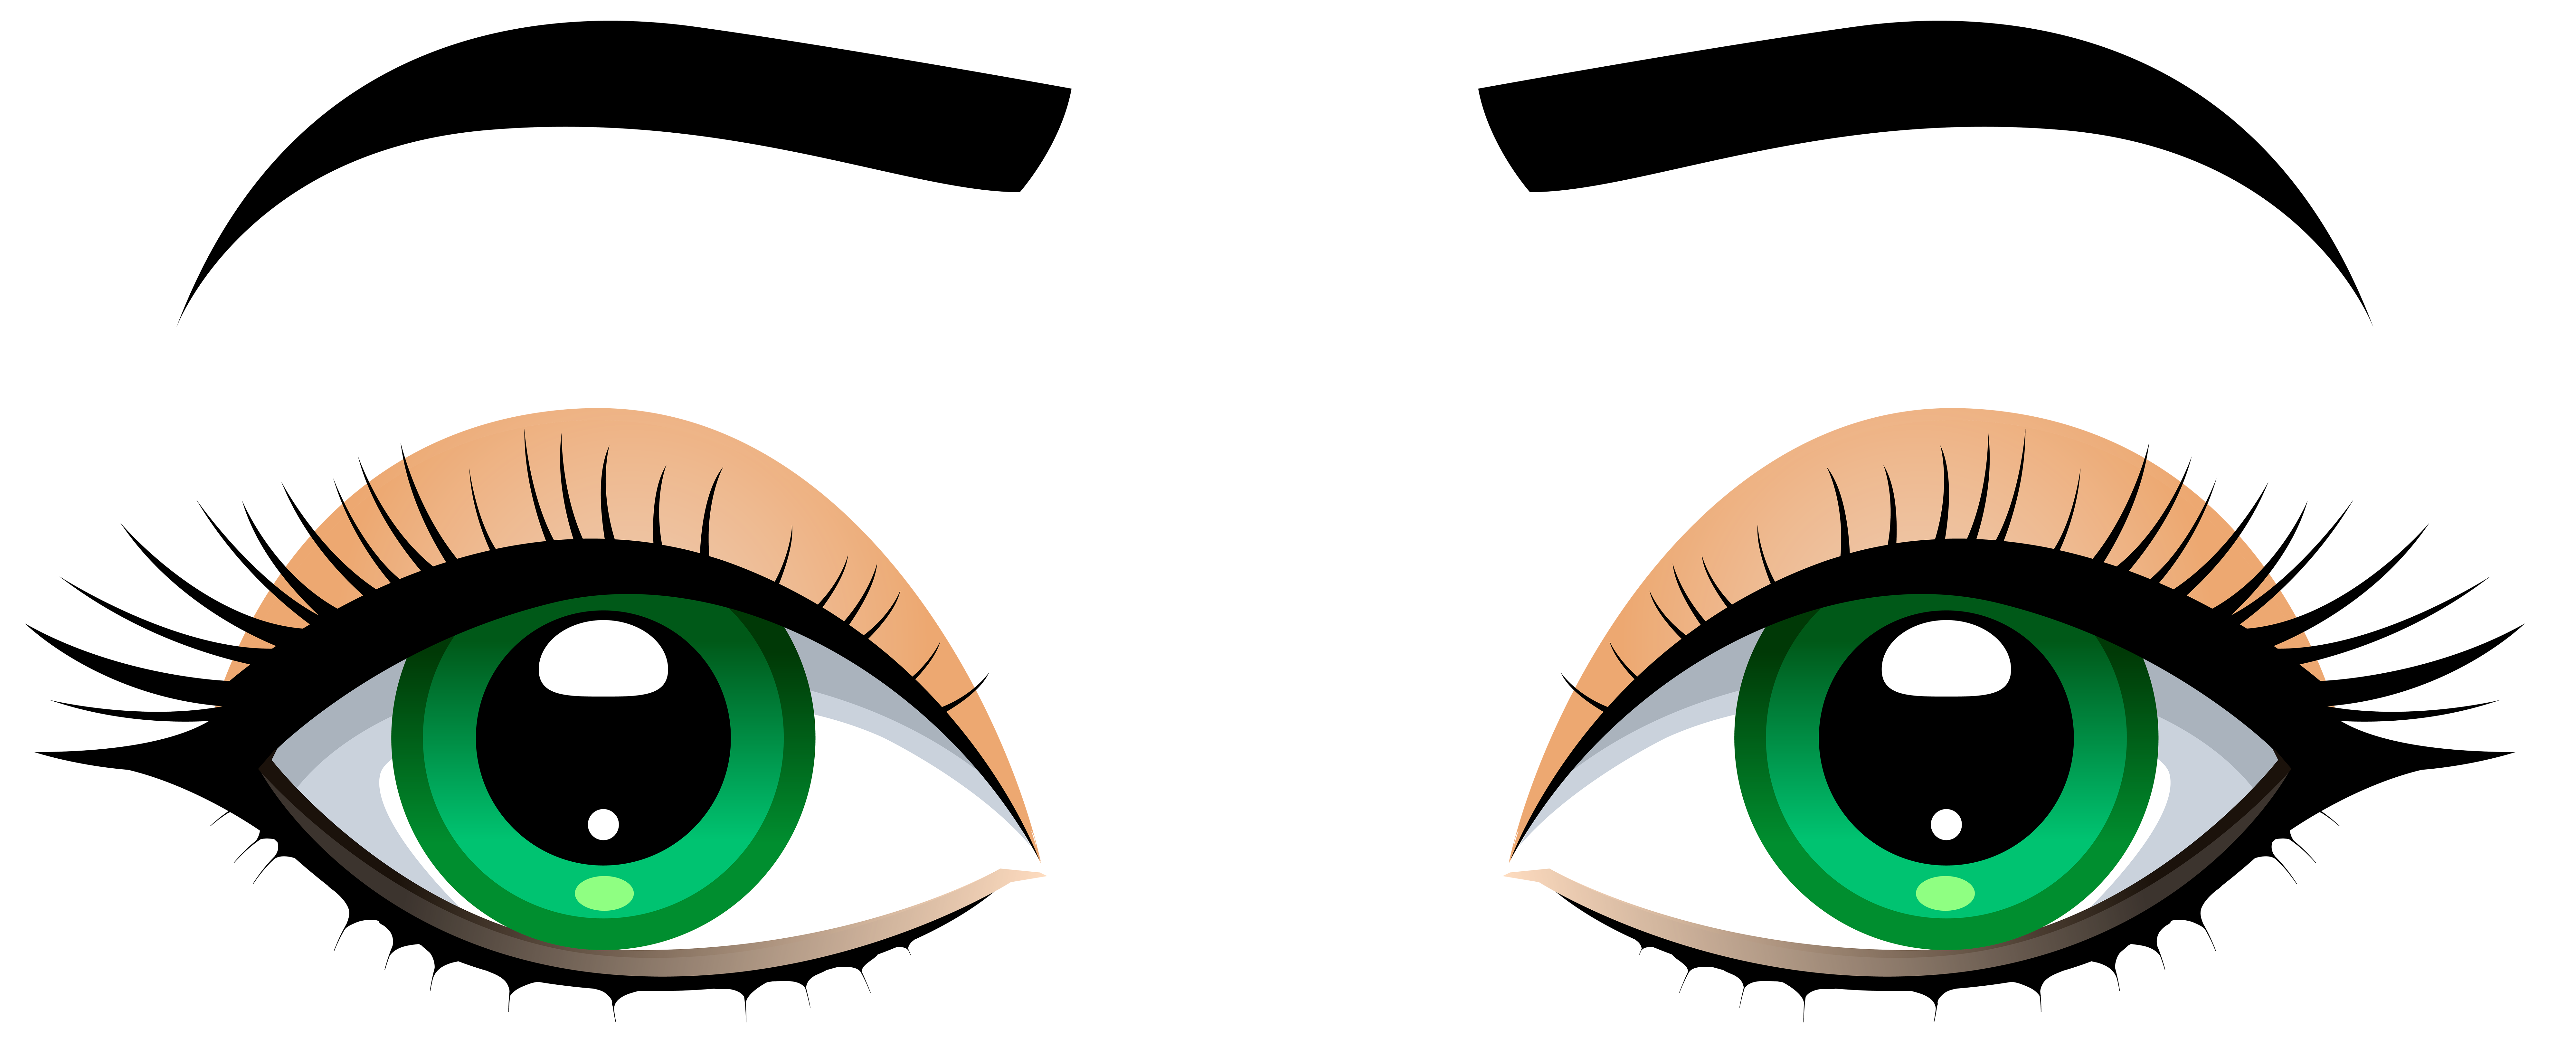 Eyelash clipart gold. Female eyes with eyebrows